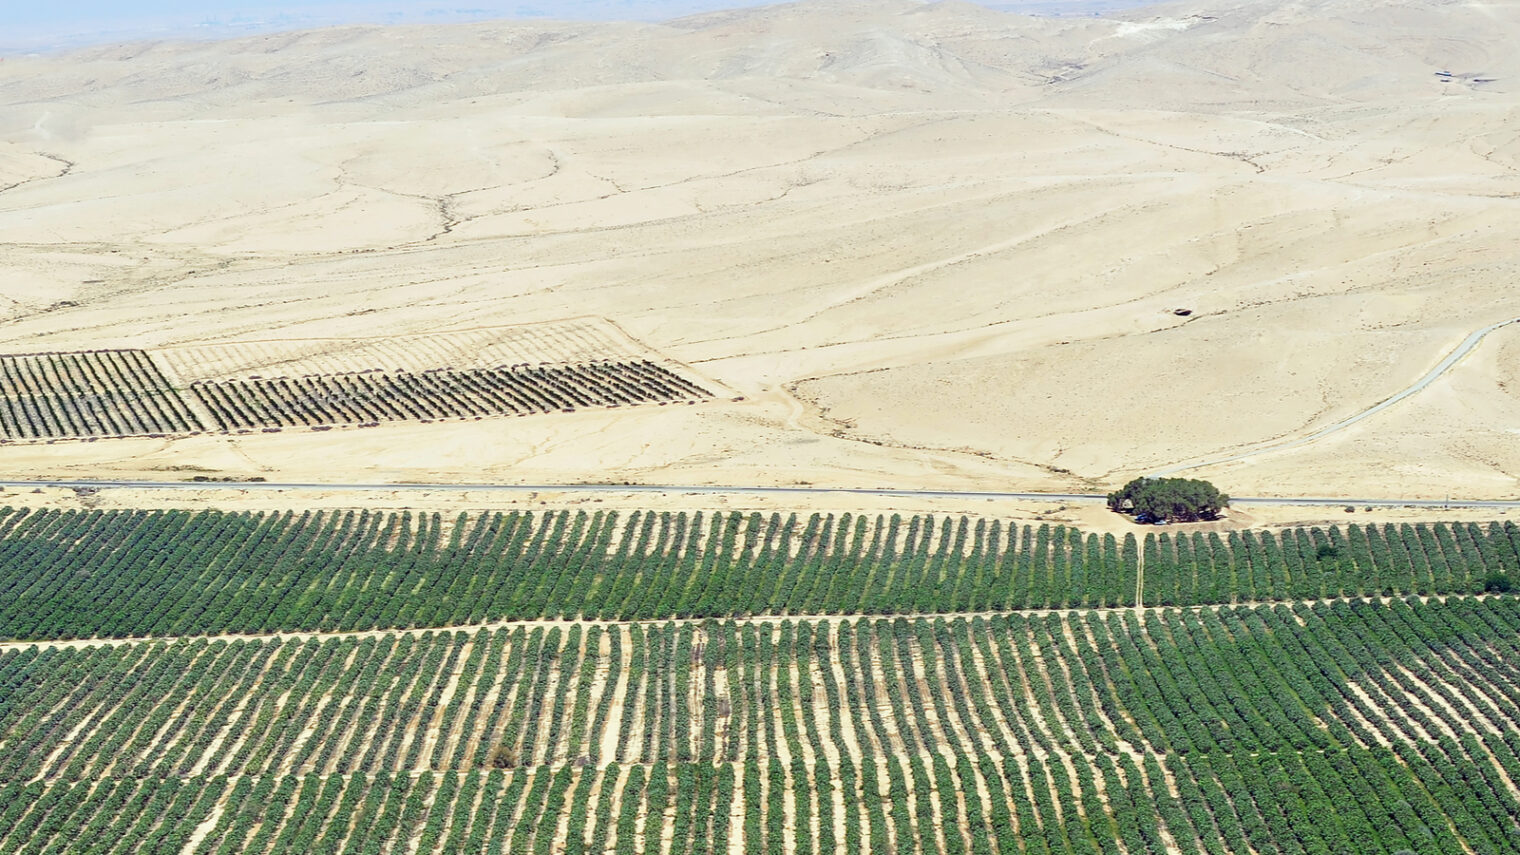 Can Israel help green the world, not just its own desert? Photo via Shutterstock